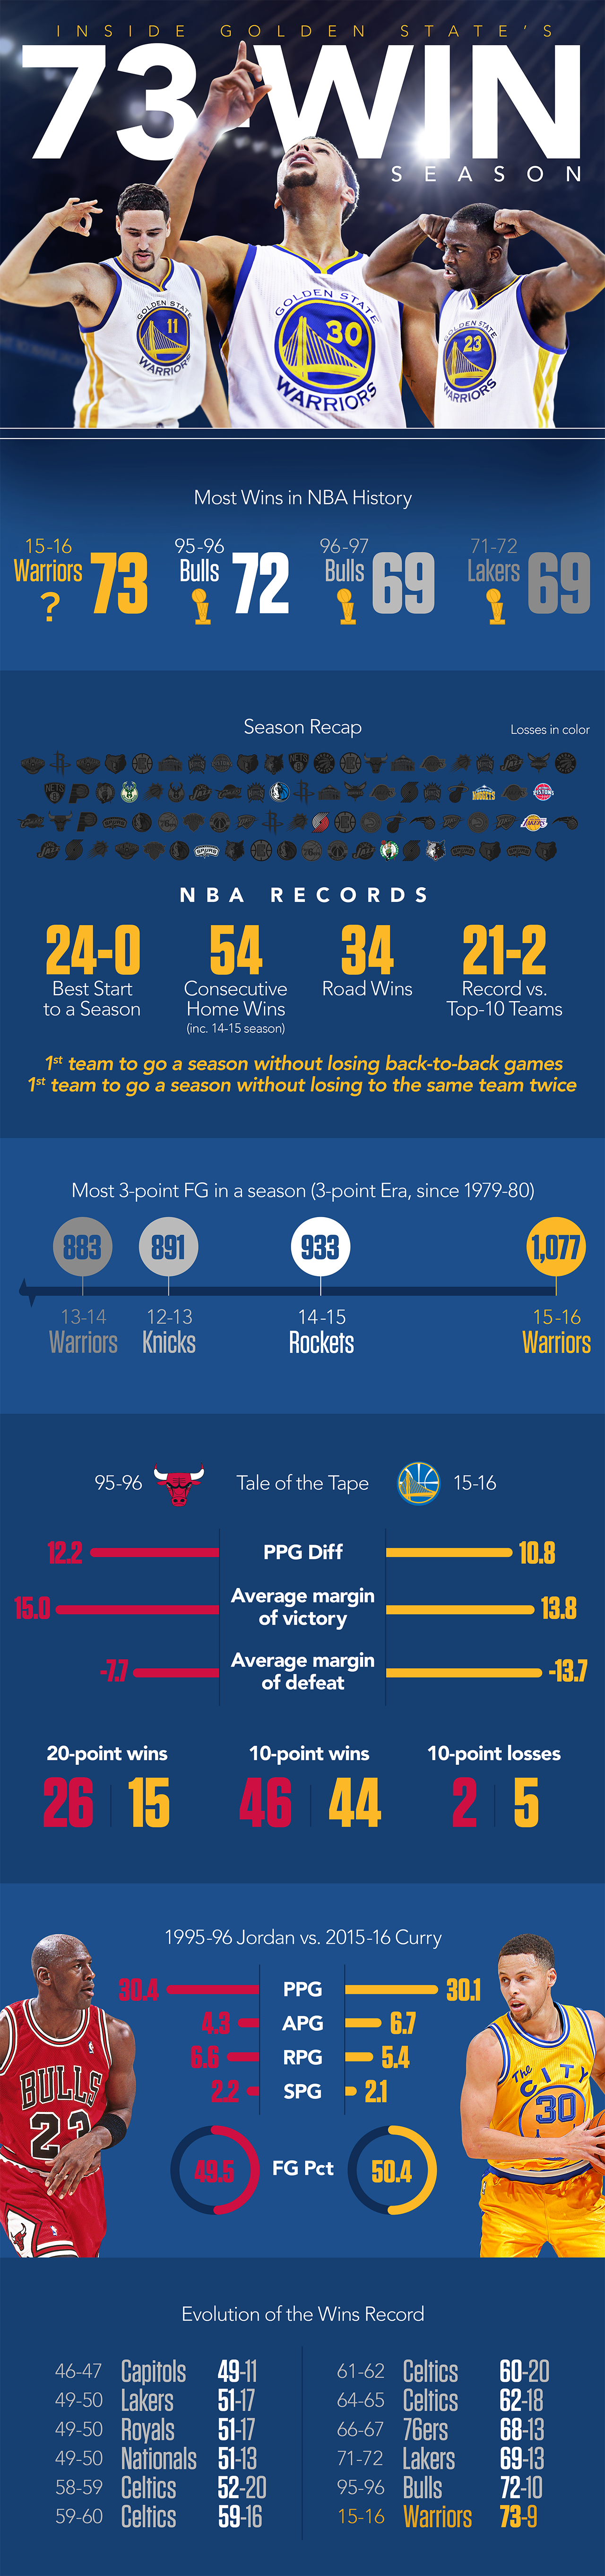 Infographic Inside the Golden State Warriors' 73win season ESPN